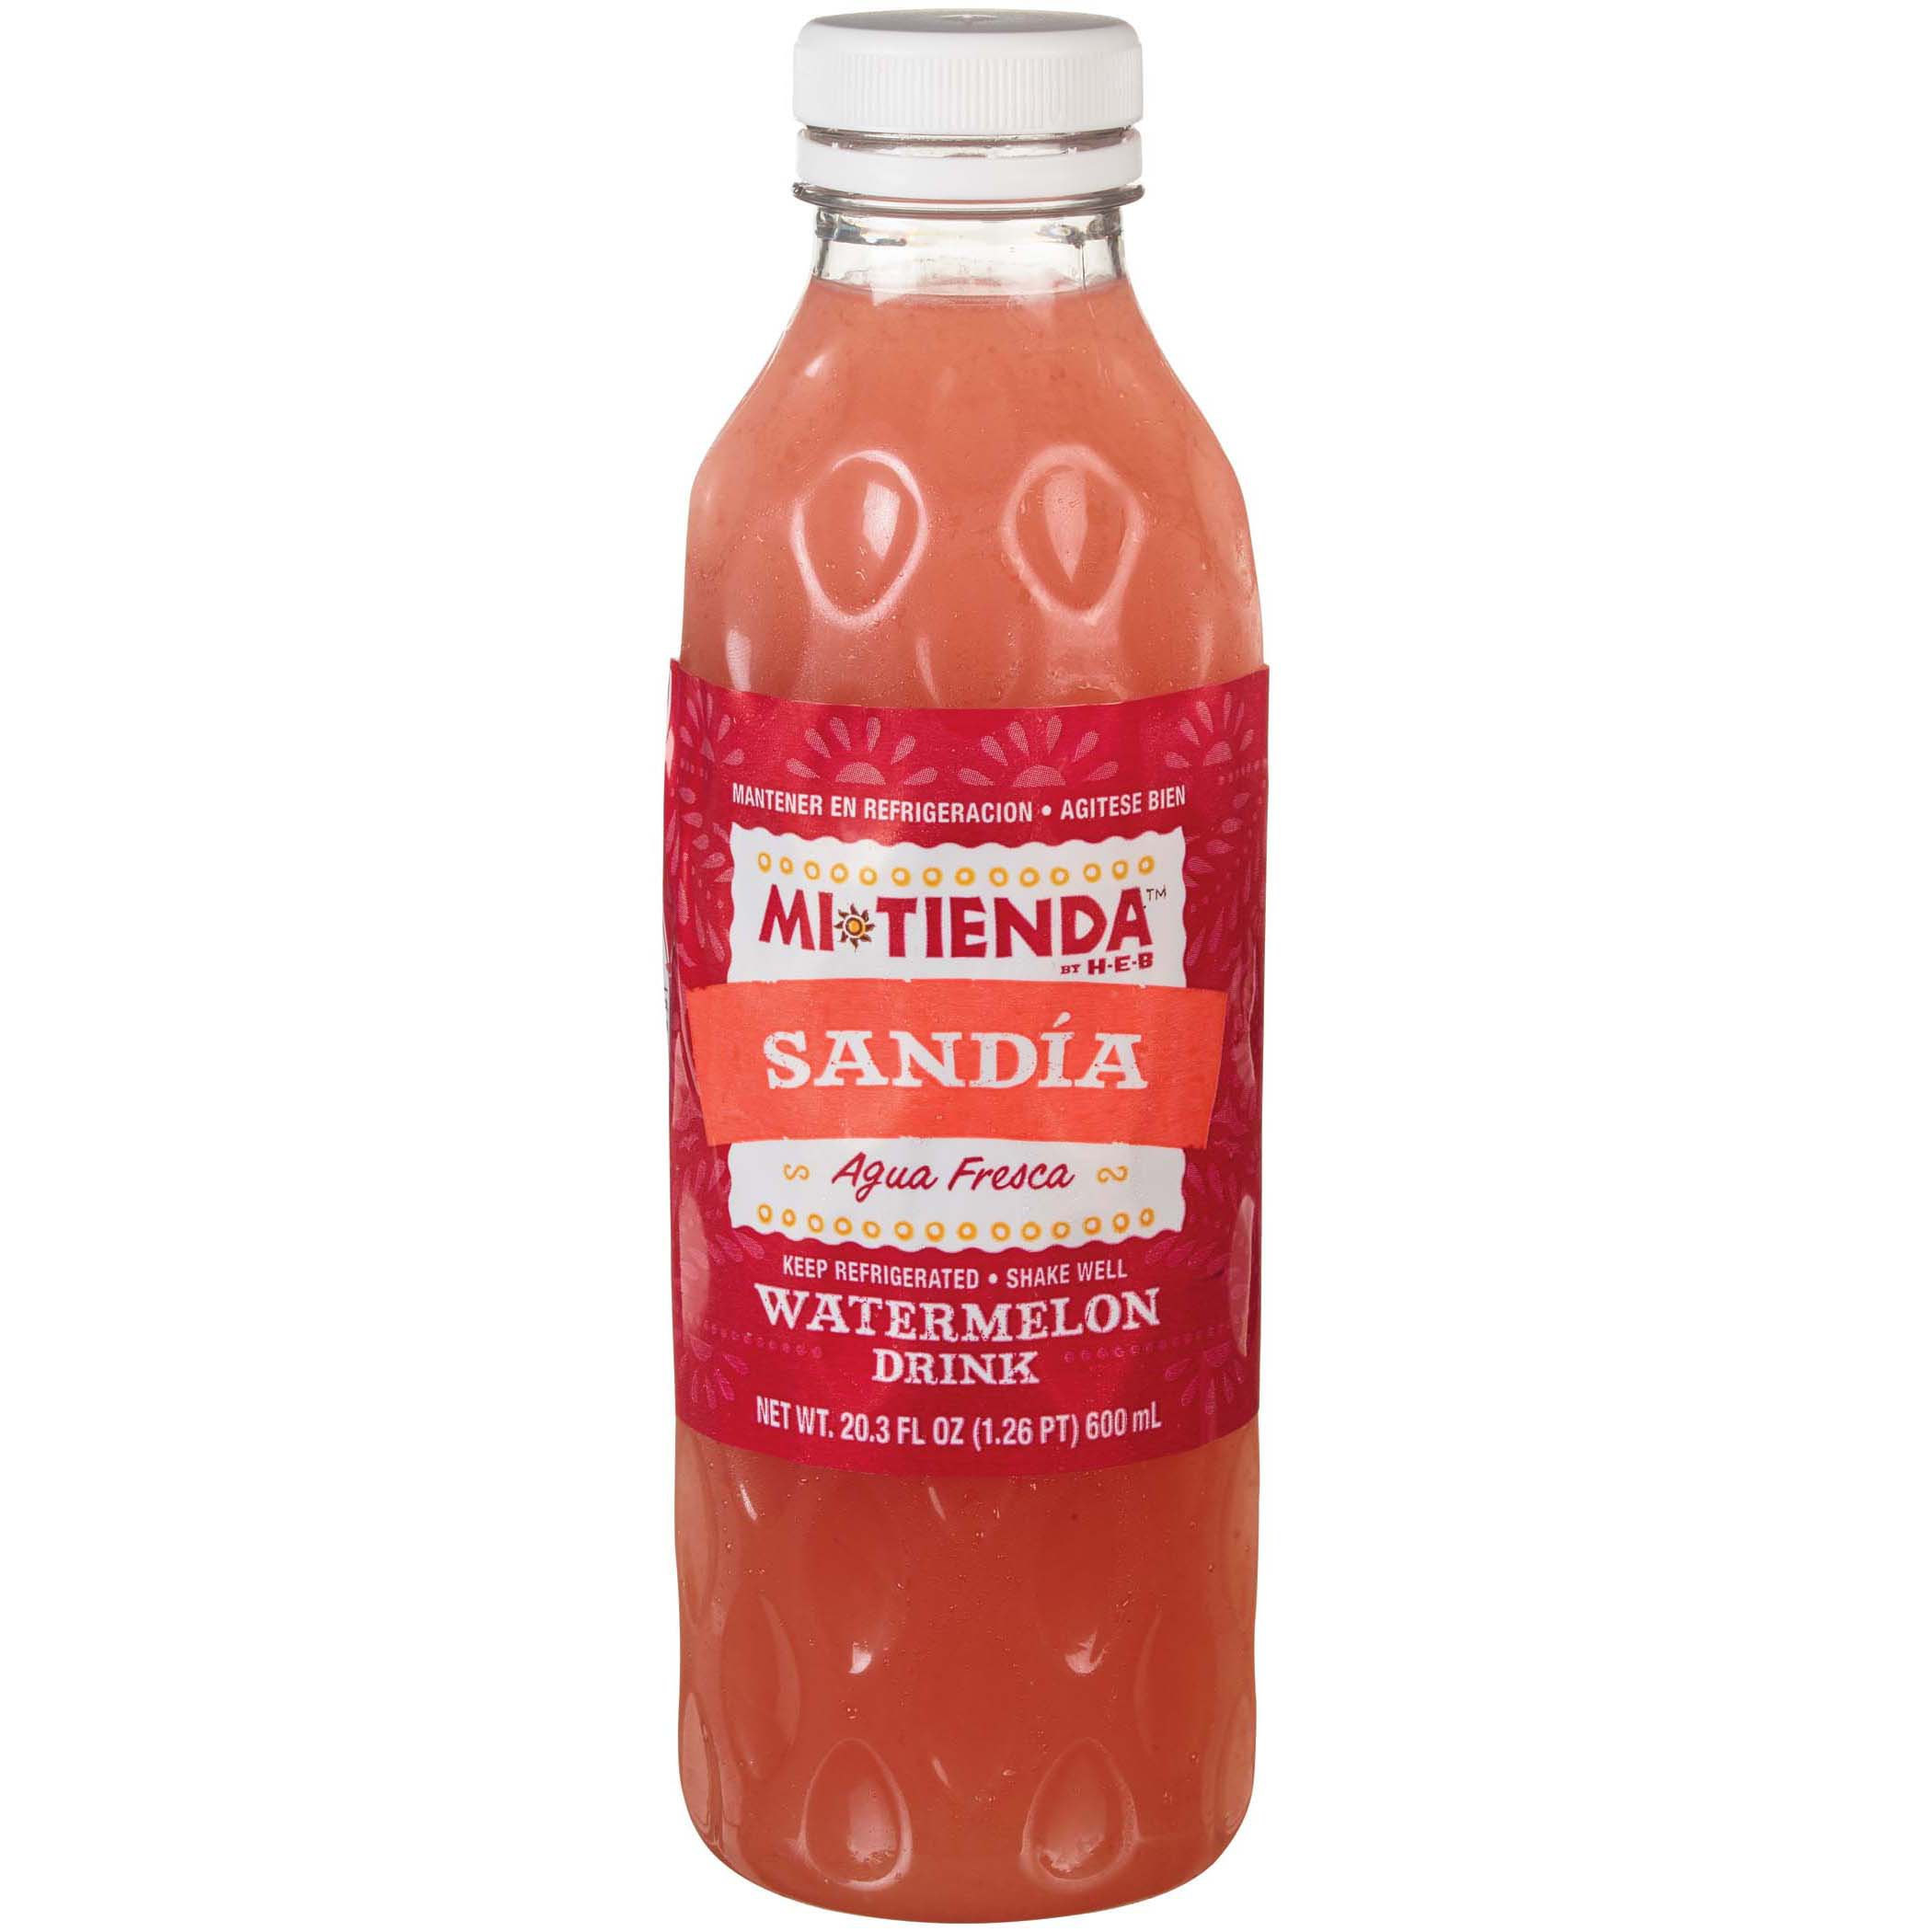 Aguas Frescas Strawberry Bottle